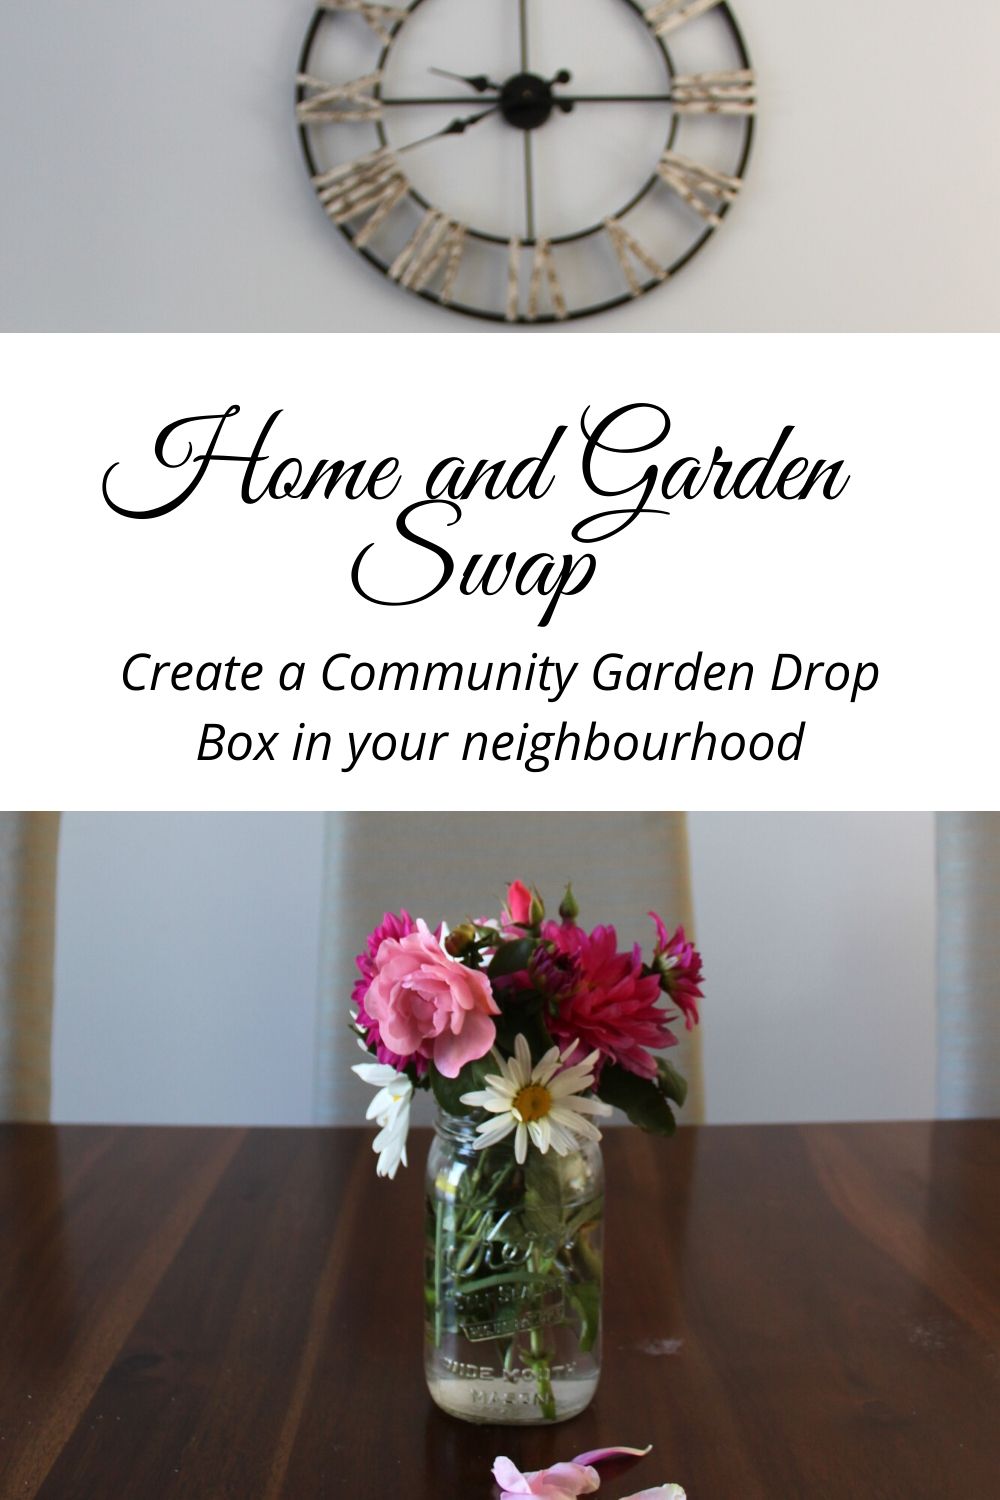 Home and Garden Swap (1)